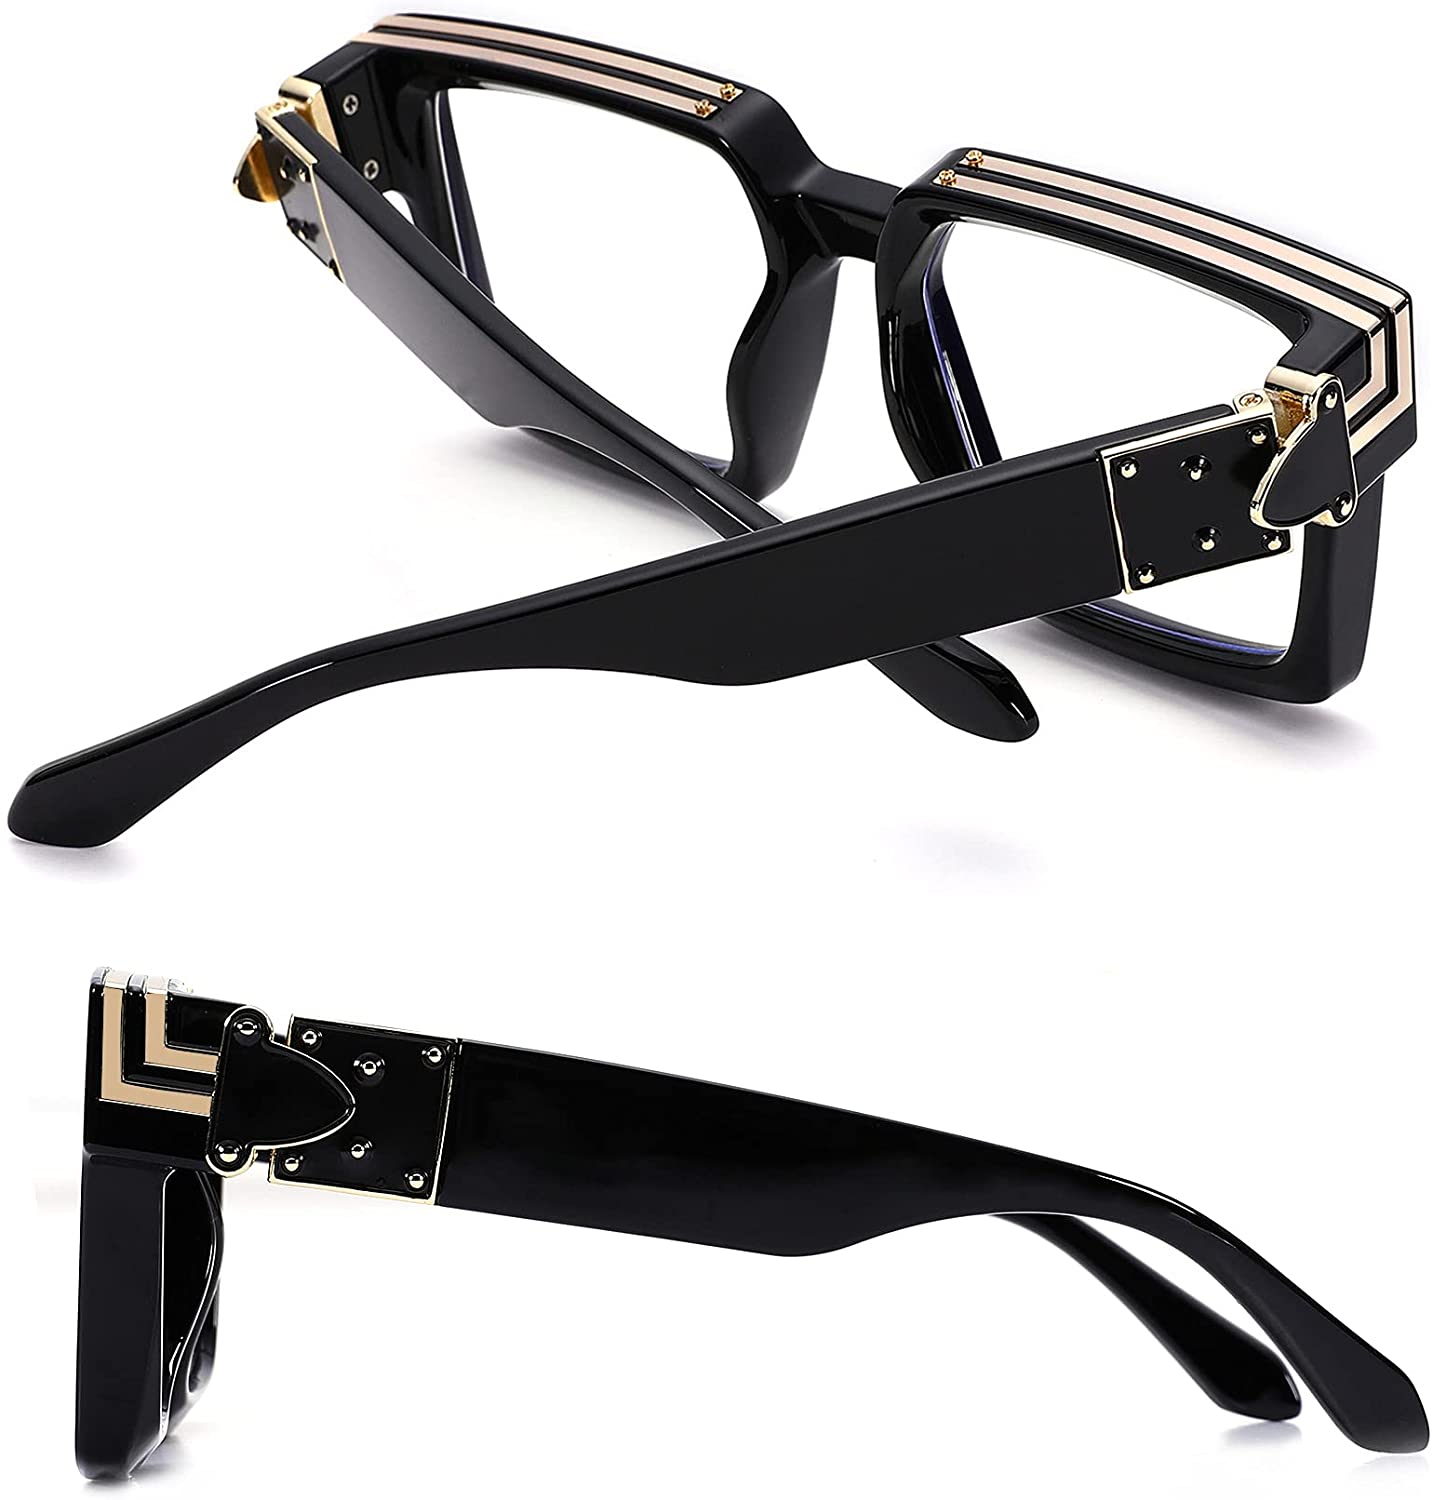 Retro Square Trillionaire Thick Frame Fashion Sunglasses